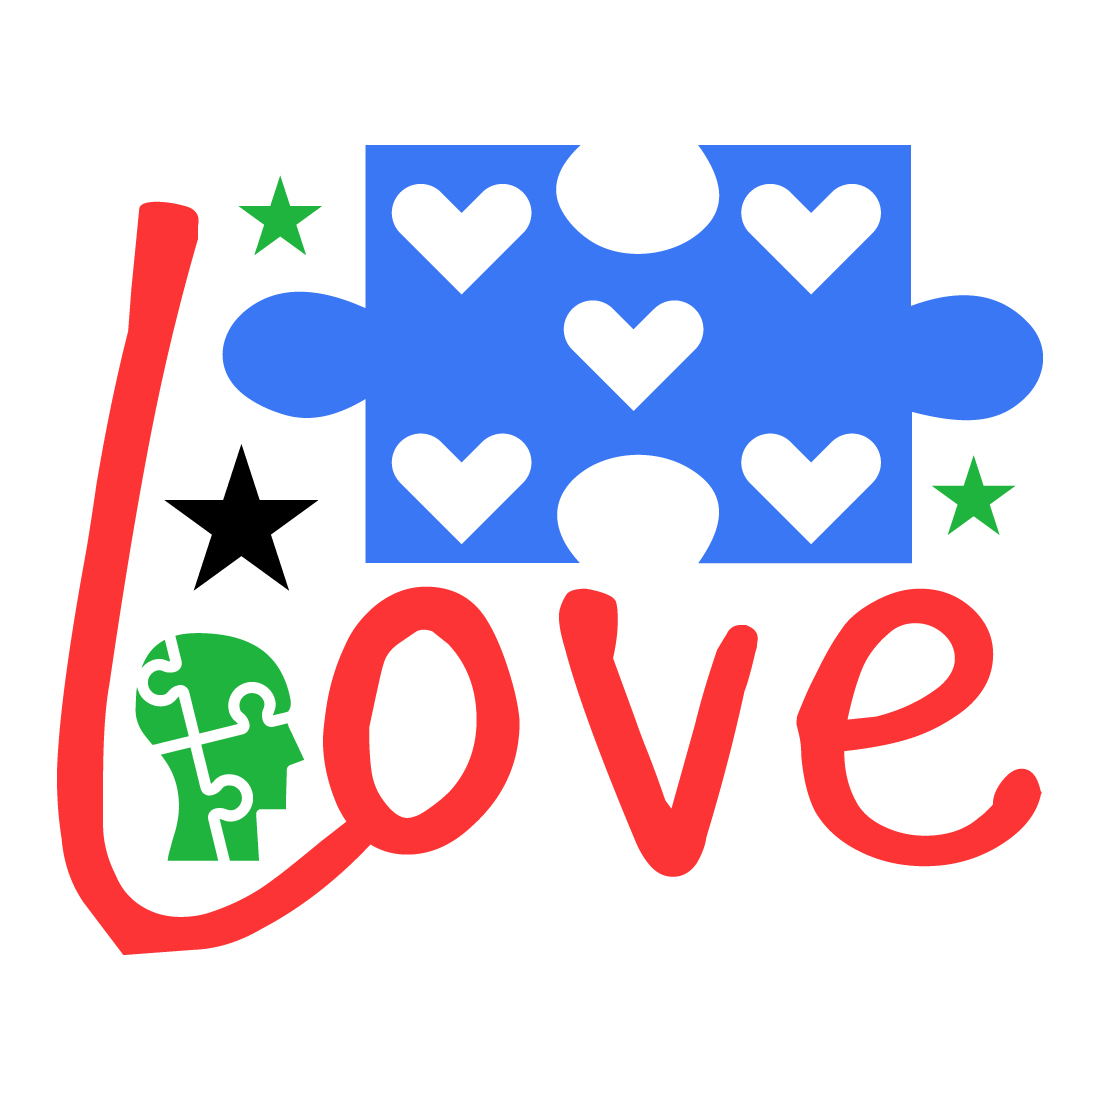 Love SVG Design cover image.